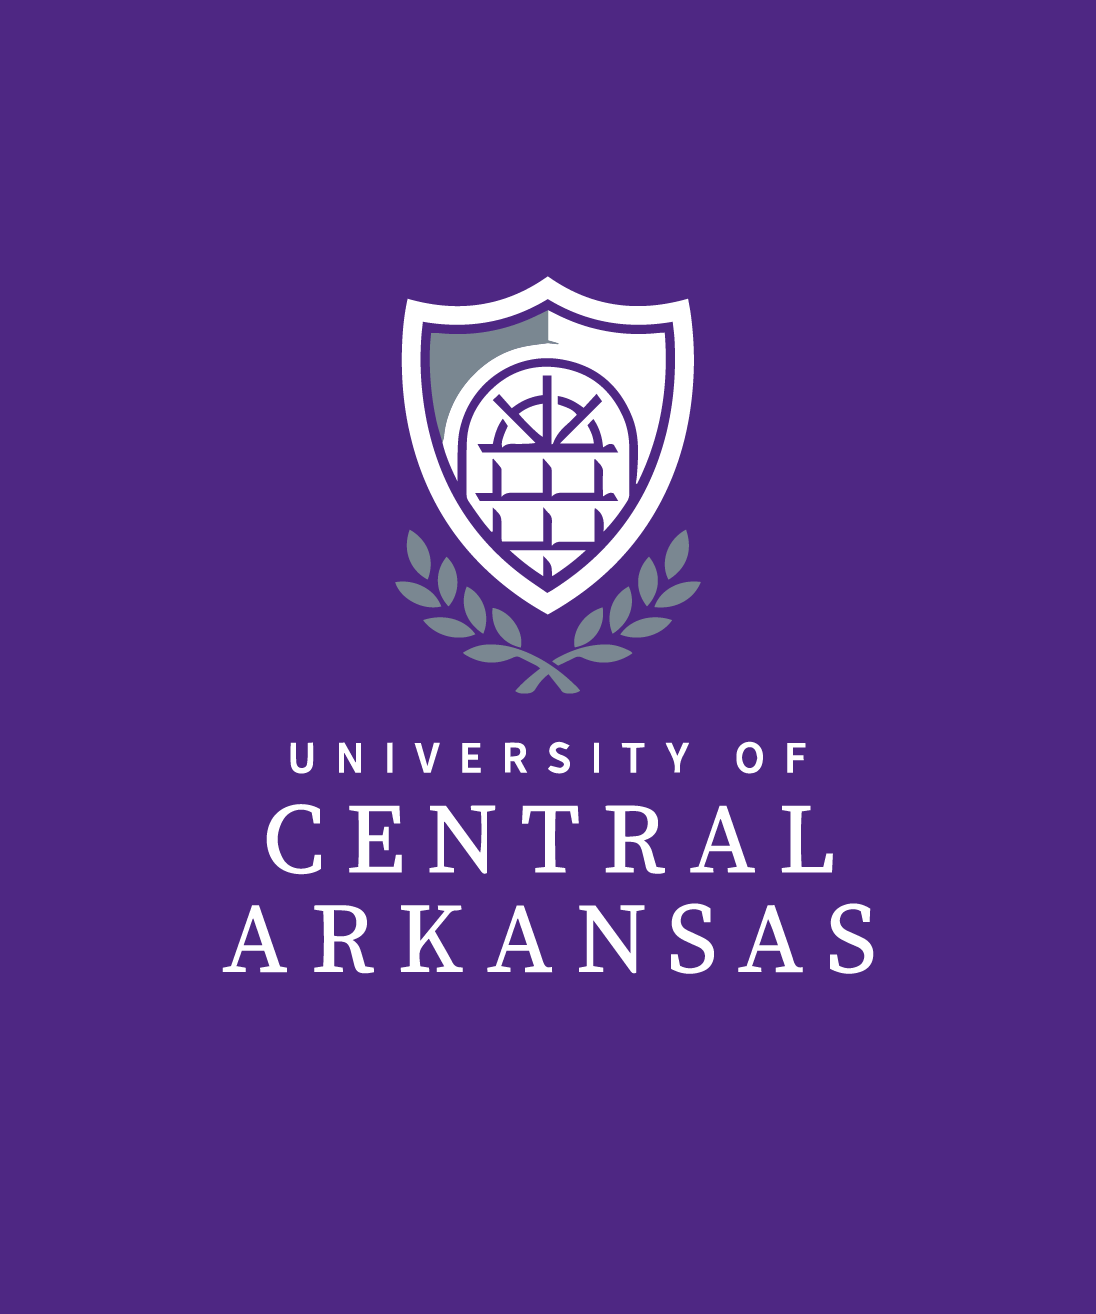 University of Central Arkansas logo